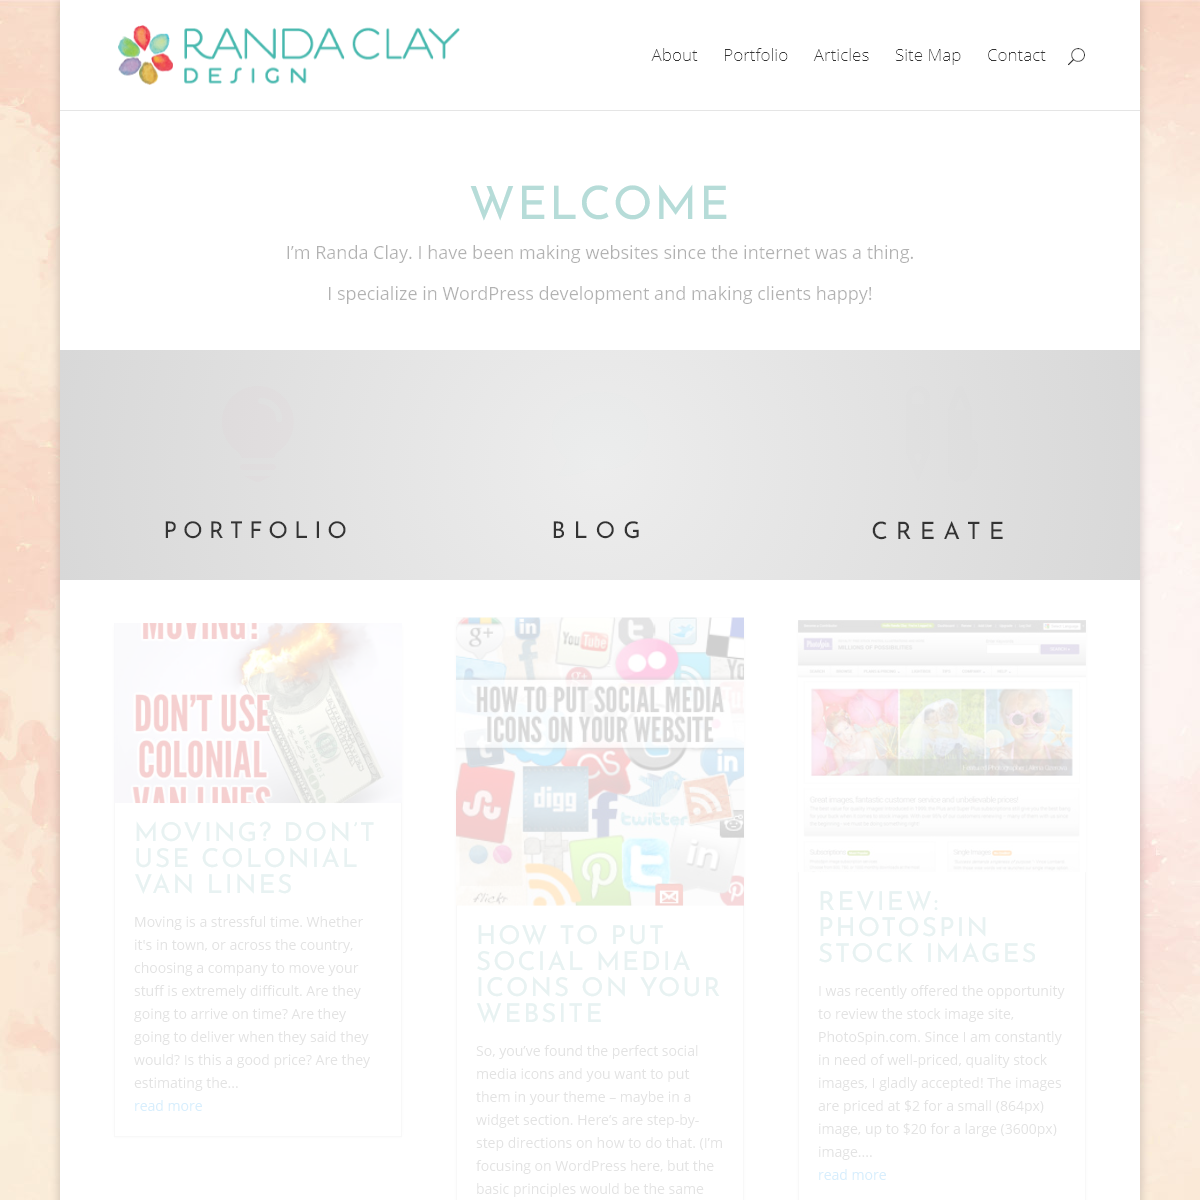 A complete backup of randaclay.com